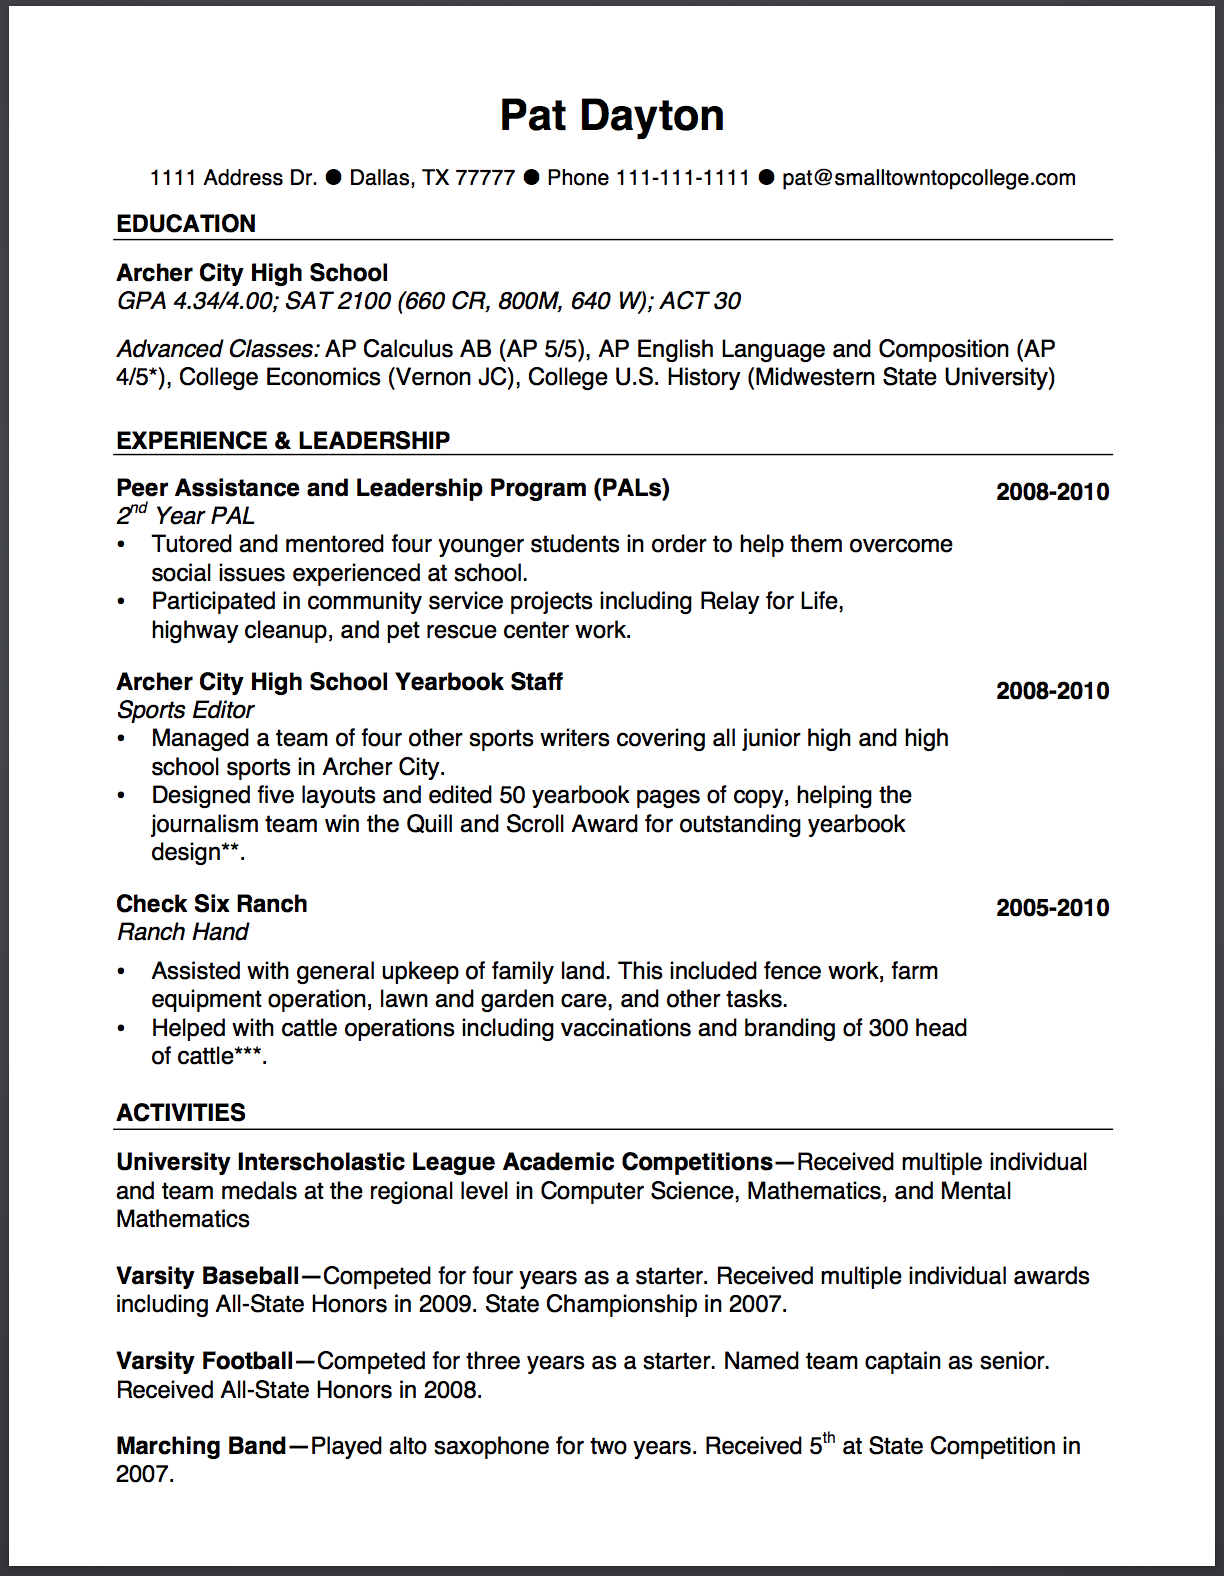 High School Resume Screen Shot 2015 10 06 At 4 56 38 Pm high school resume|wikiresume.com